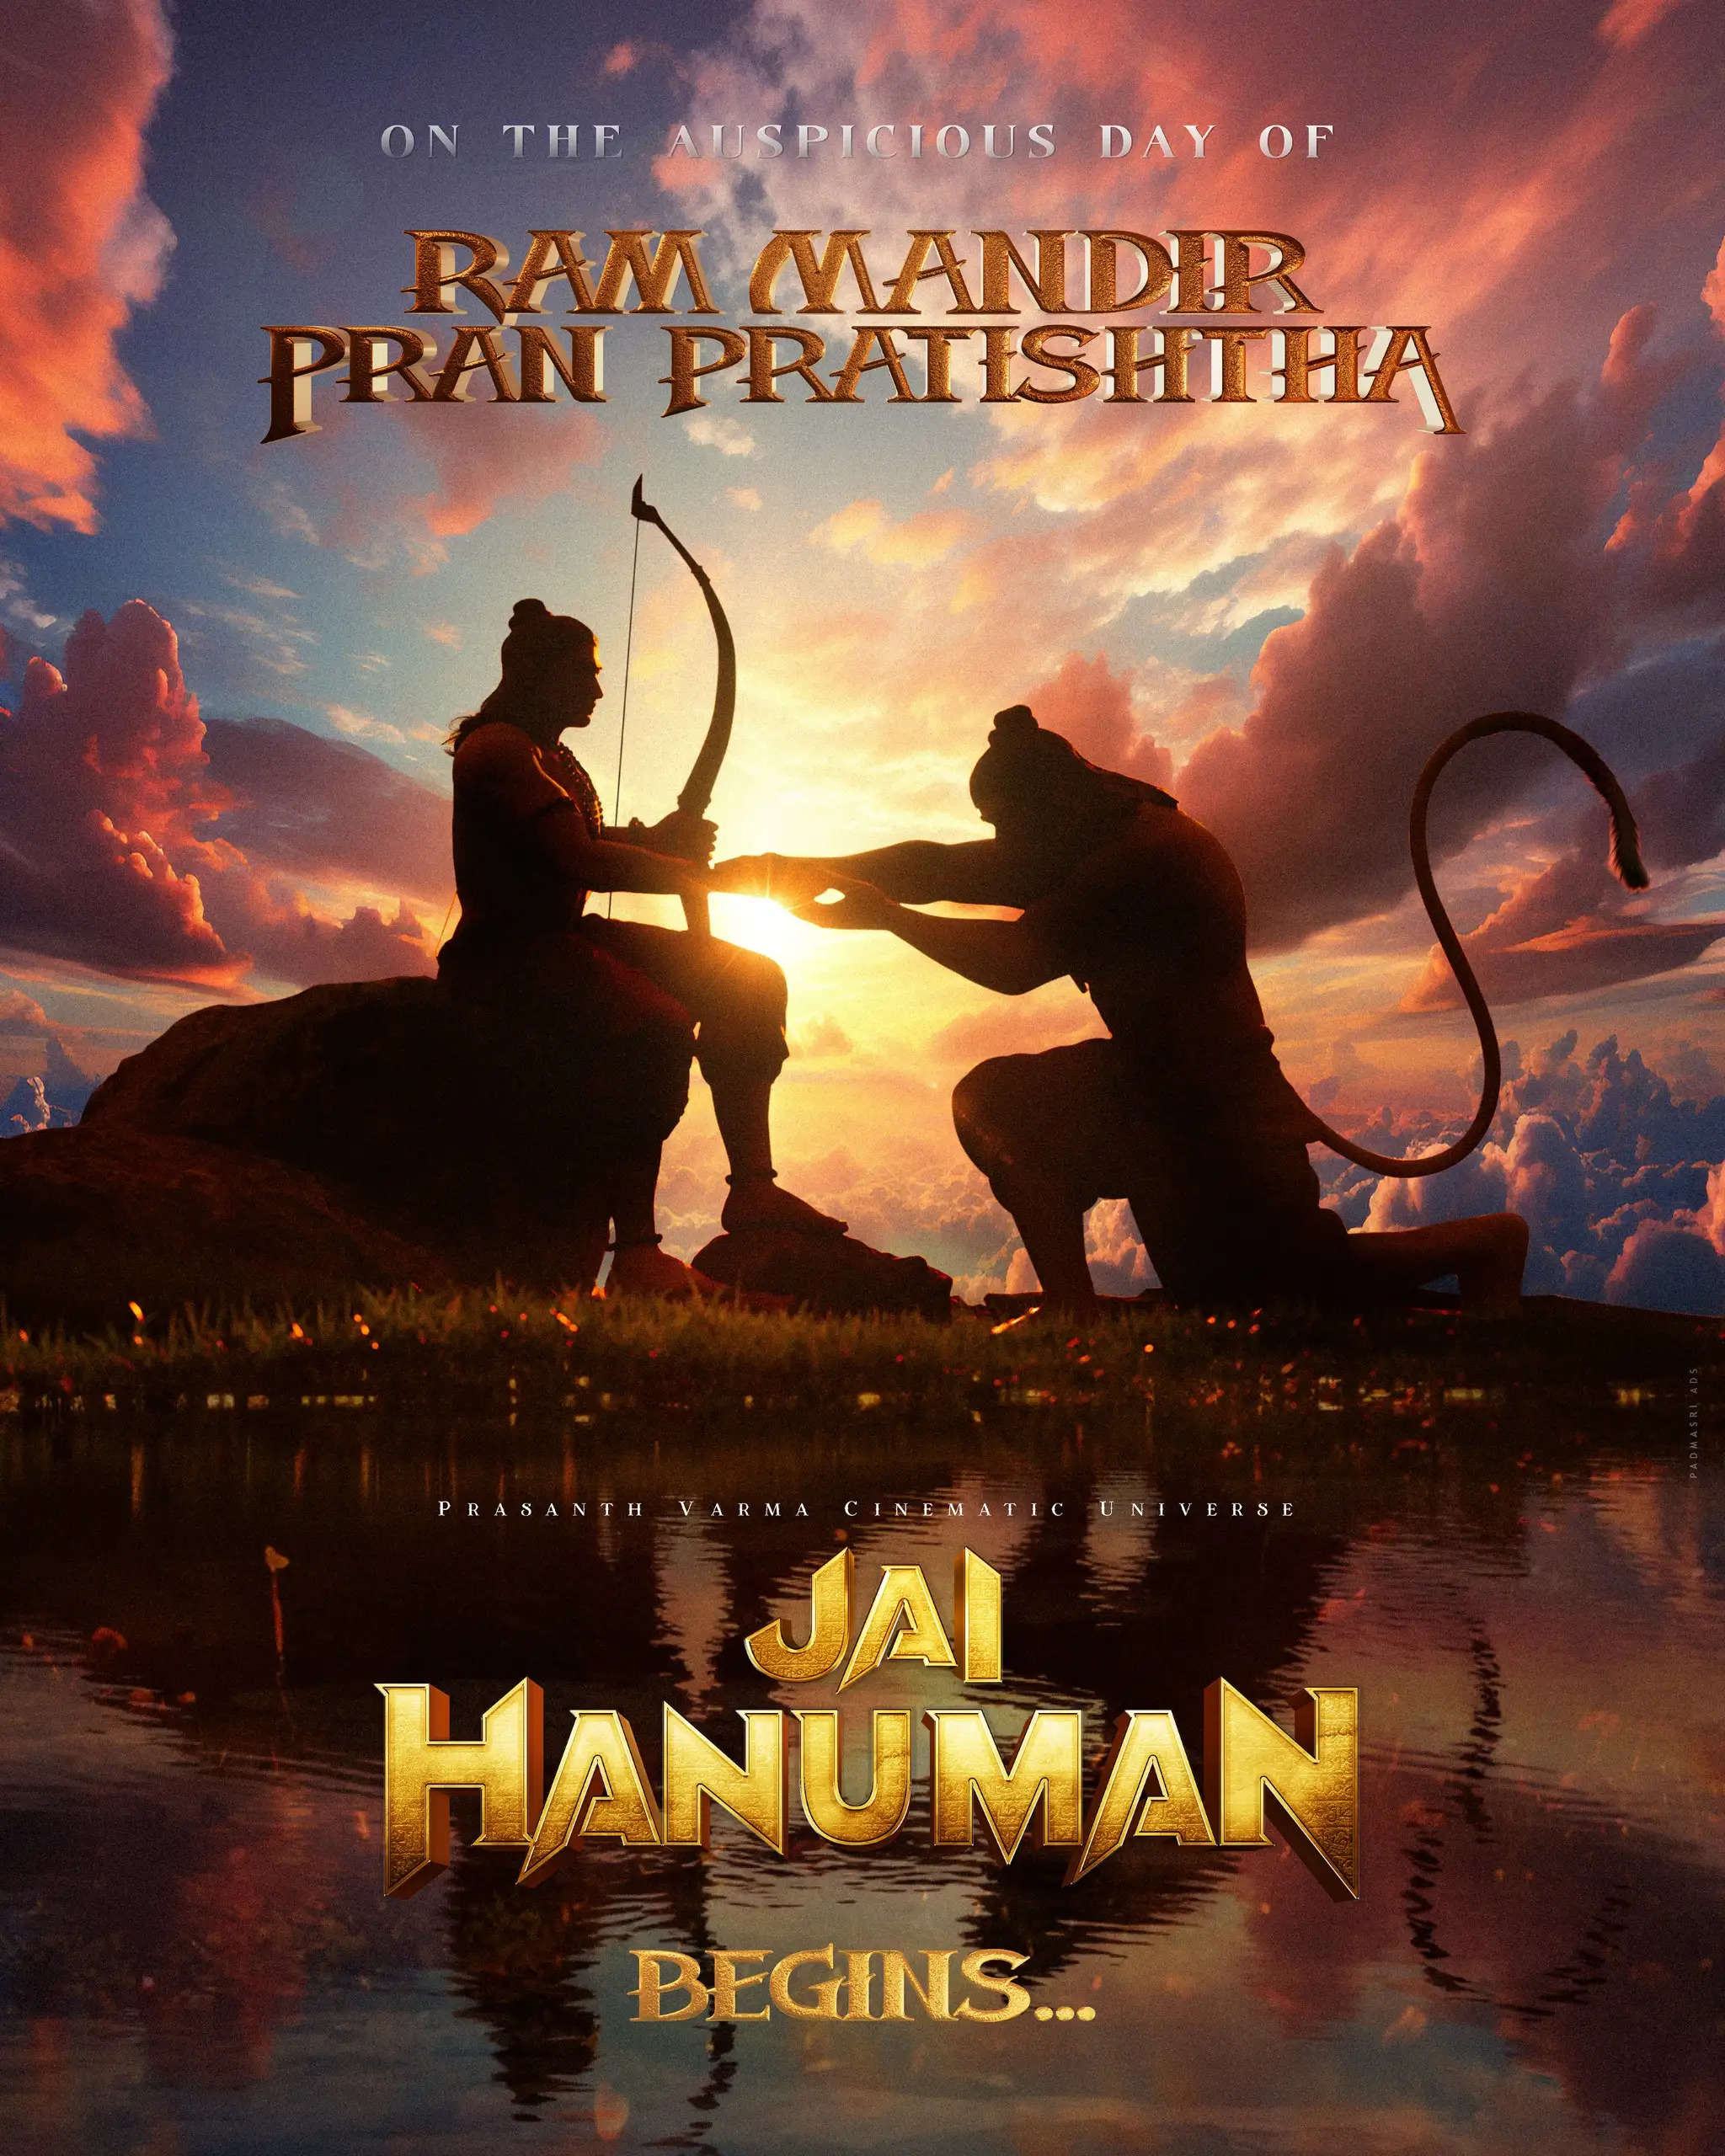 Director Prasanth Varma keeps his promise,  Announces 'Jai Hanuman' on Auspicious Day of Ram Mandir Pran Pratishta